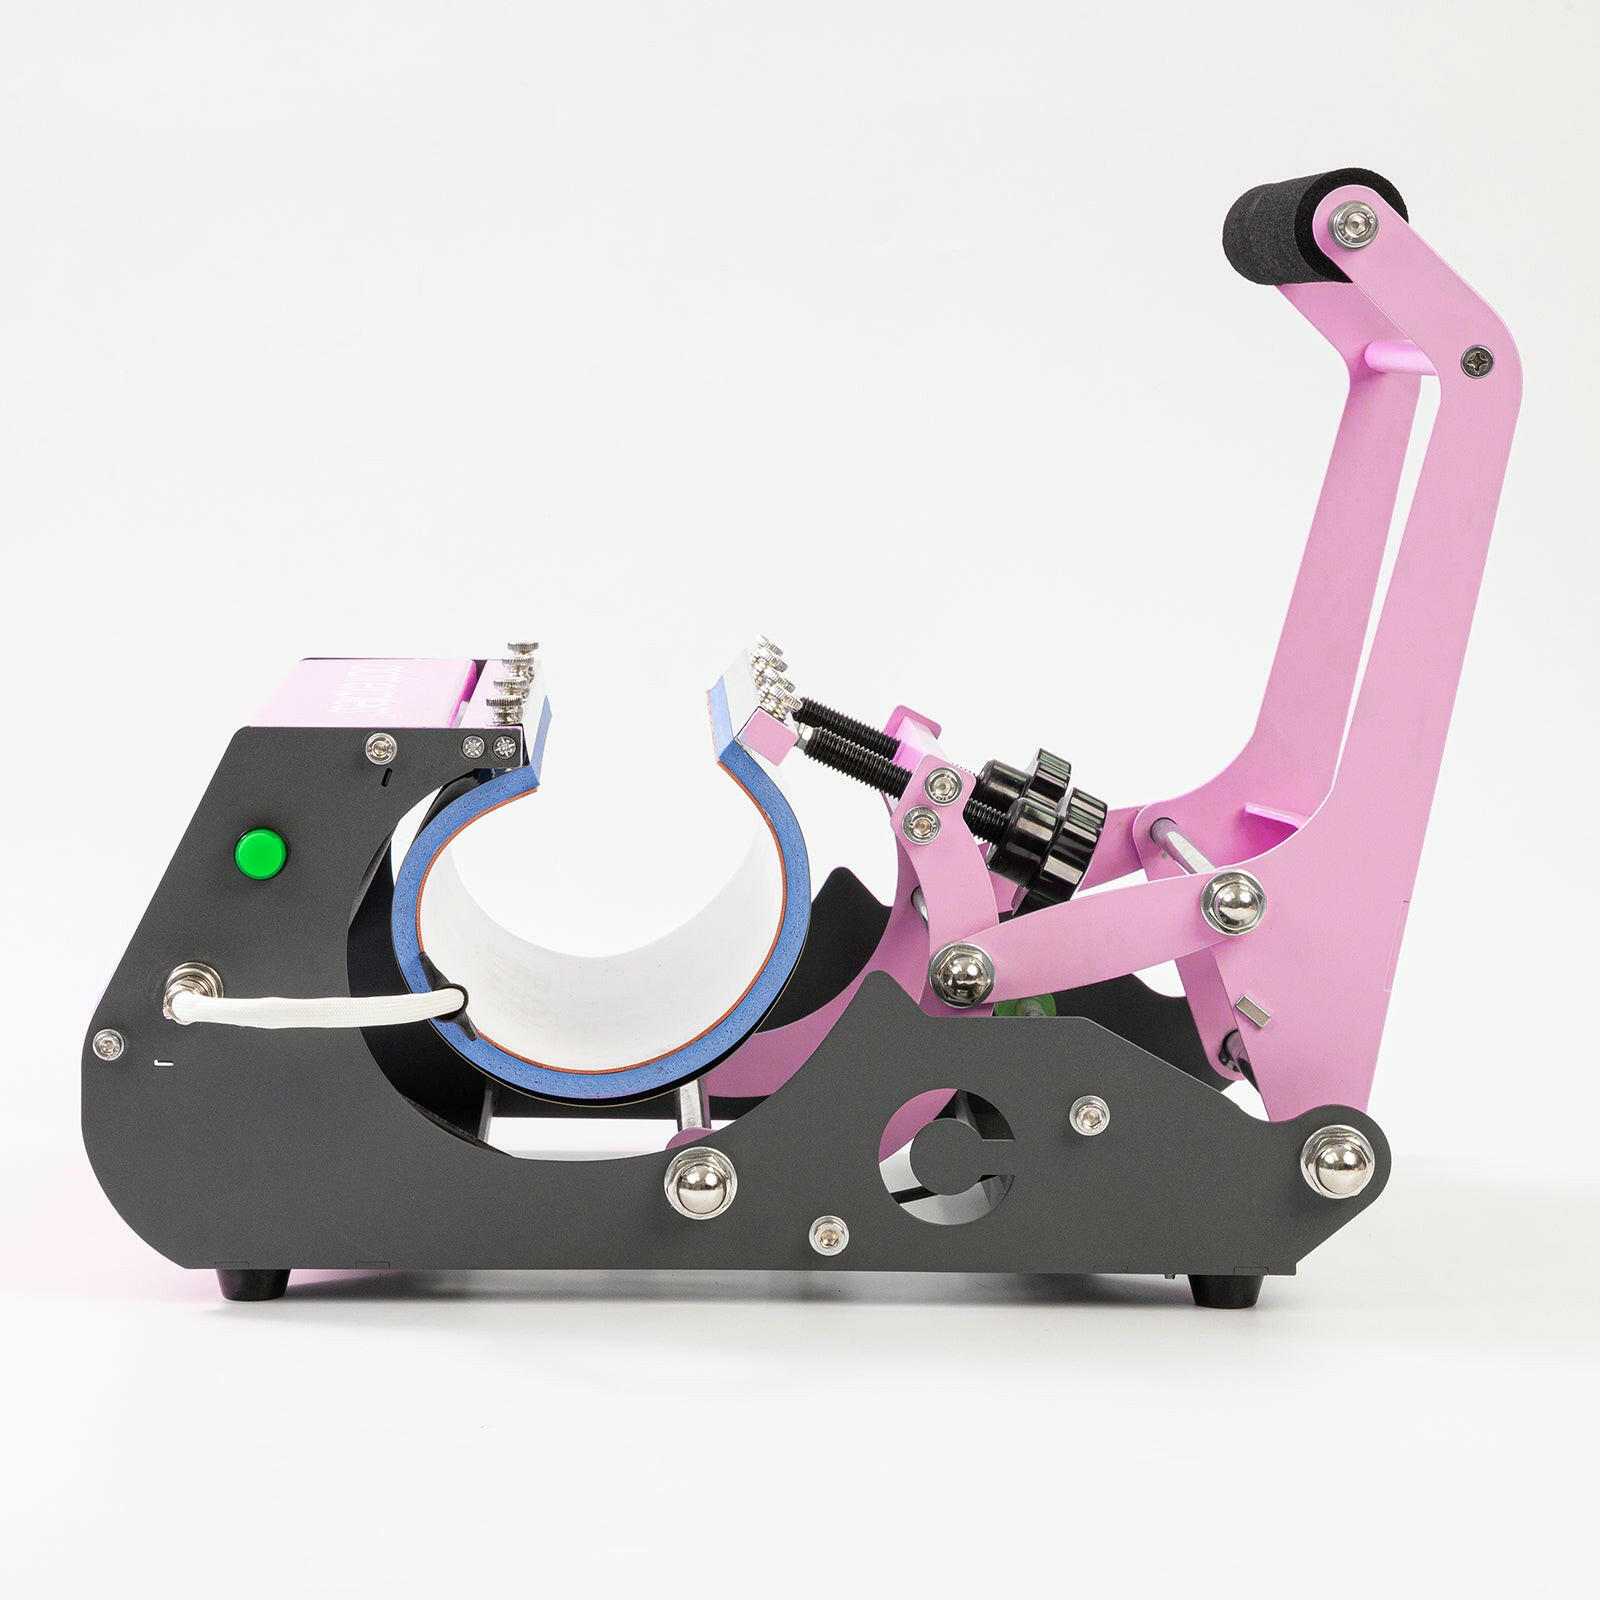 Heat Press Nation CraftPro 13 x 9 High Pressure Crafting Transfer Machine  : Pink